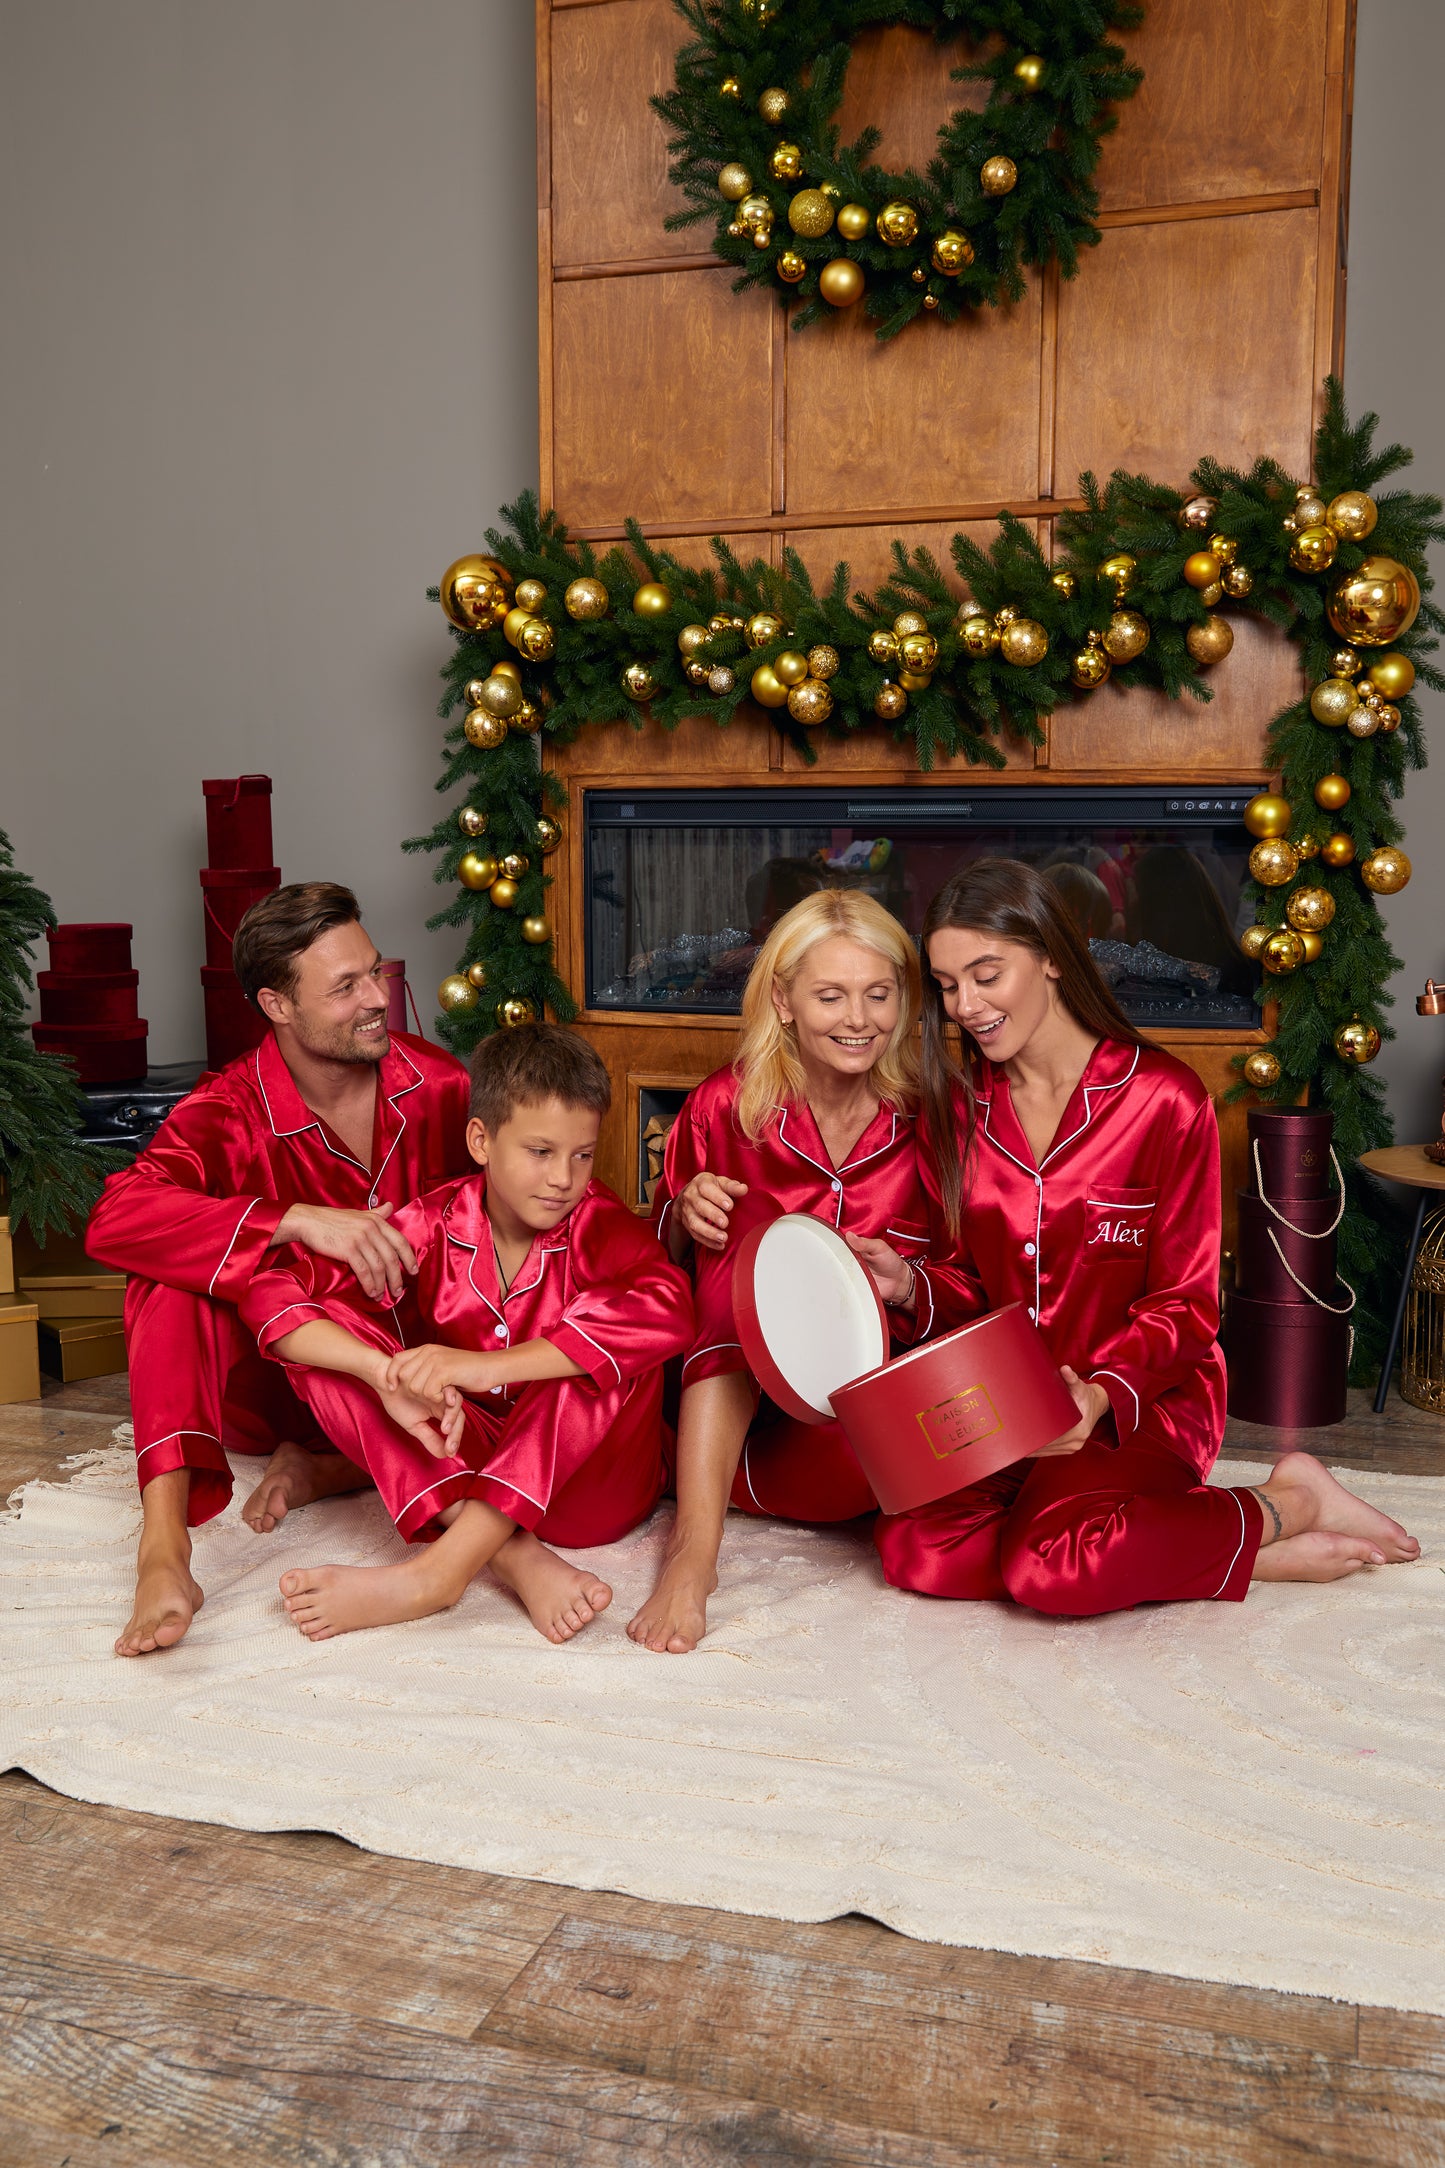 Christmas Kids Satin Pajamas Sets Long Sleeves + Pants